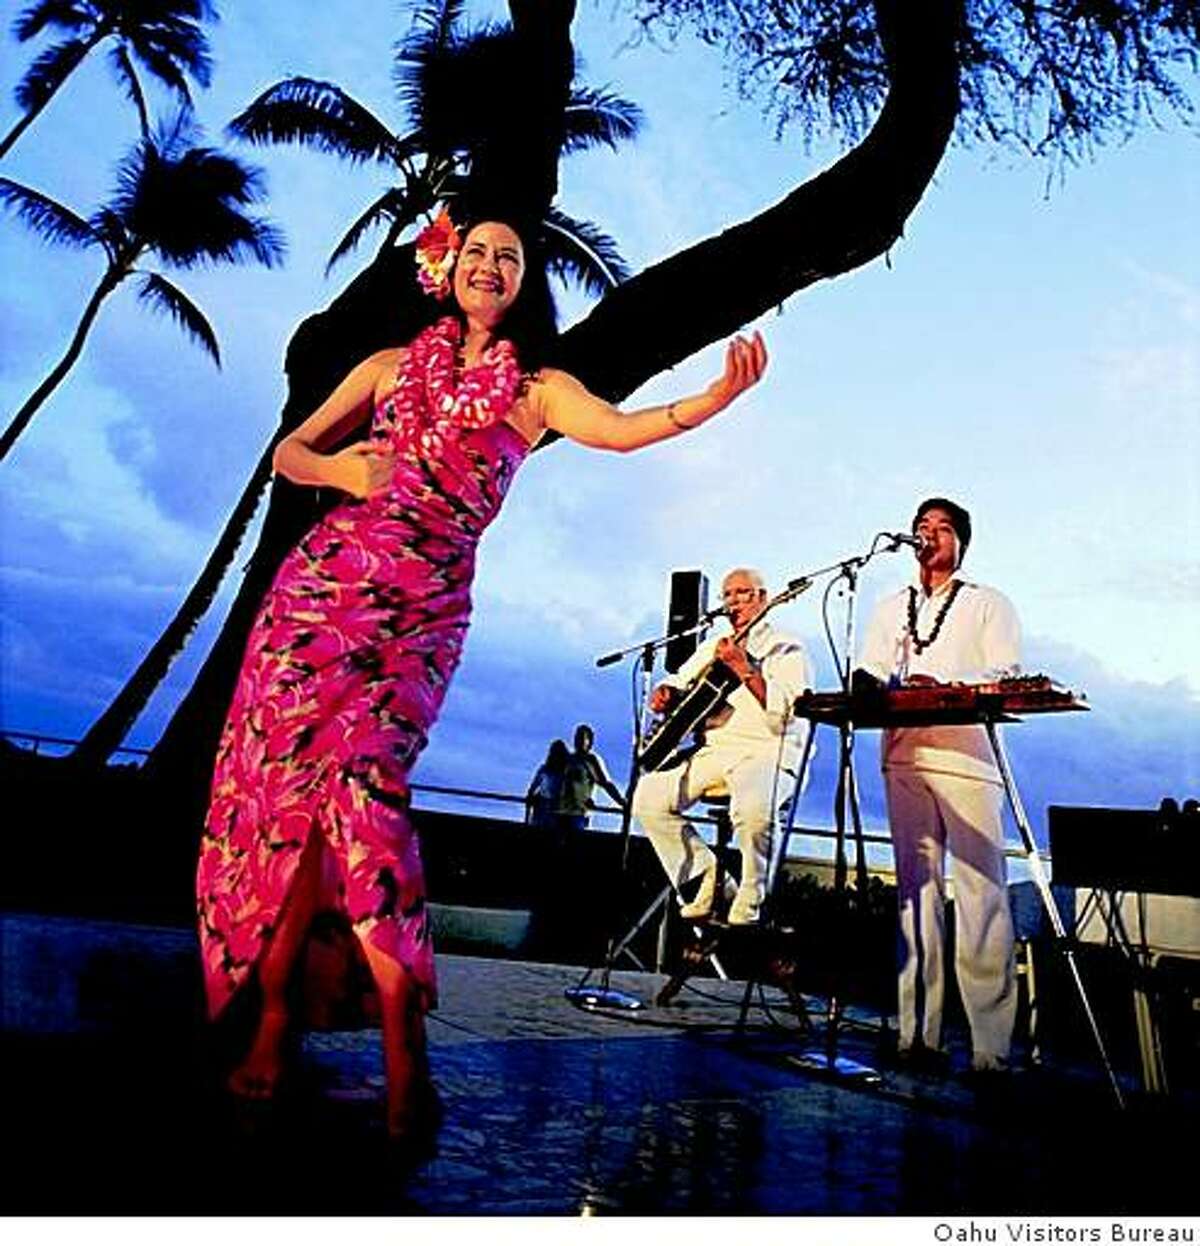 Hula dancer, Hawaii.